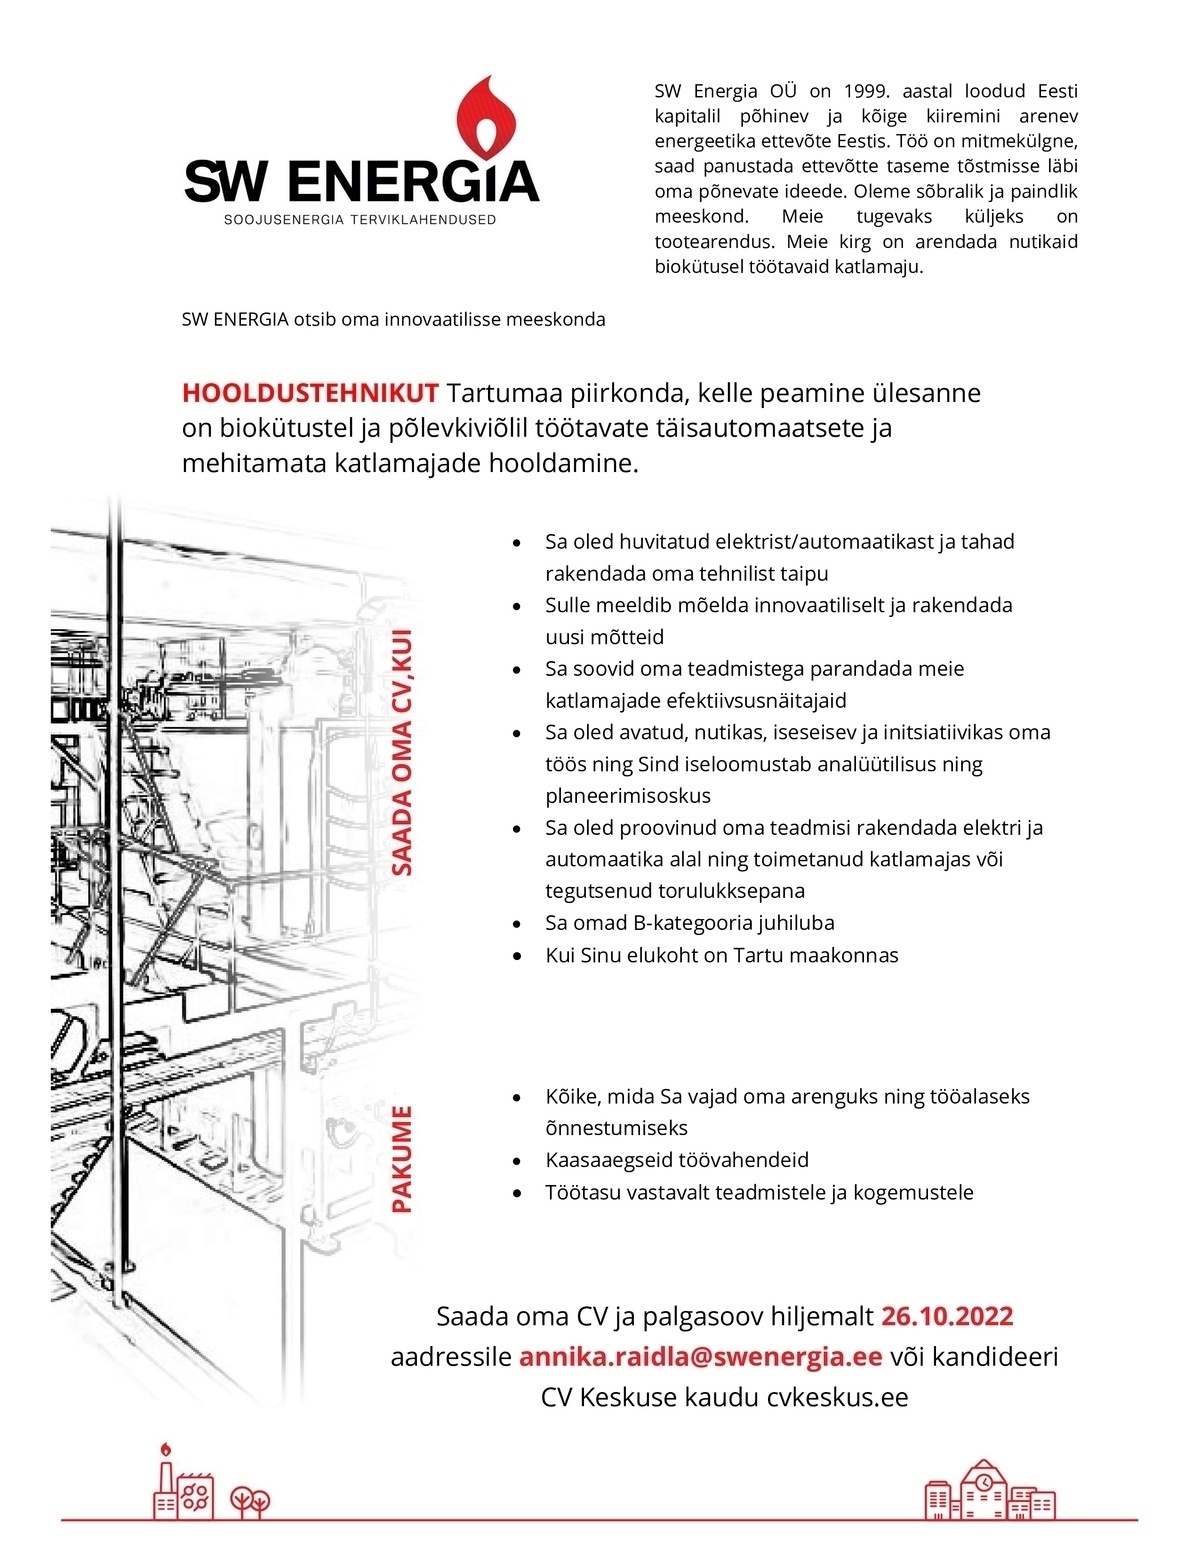 SW Energia OÜ Hooldustehnik